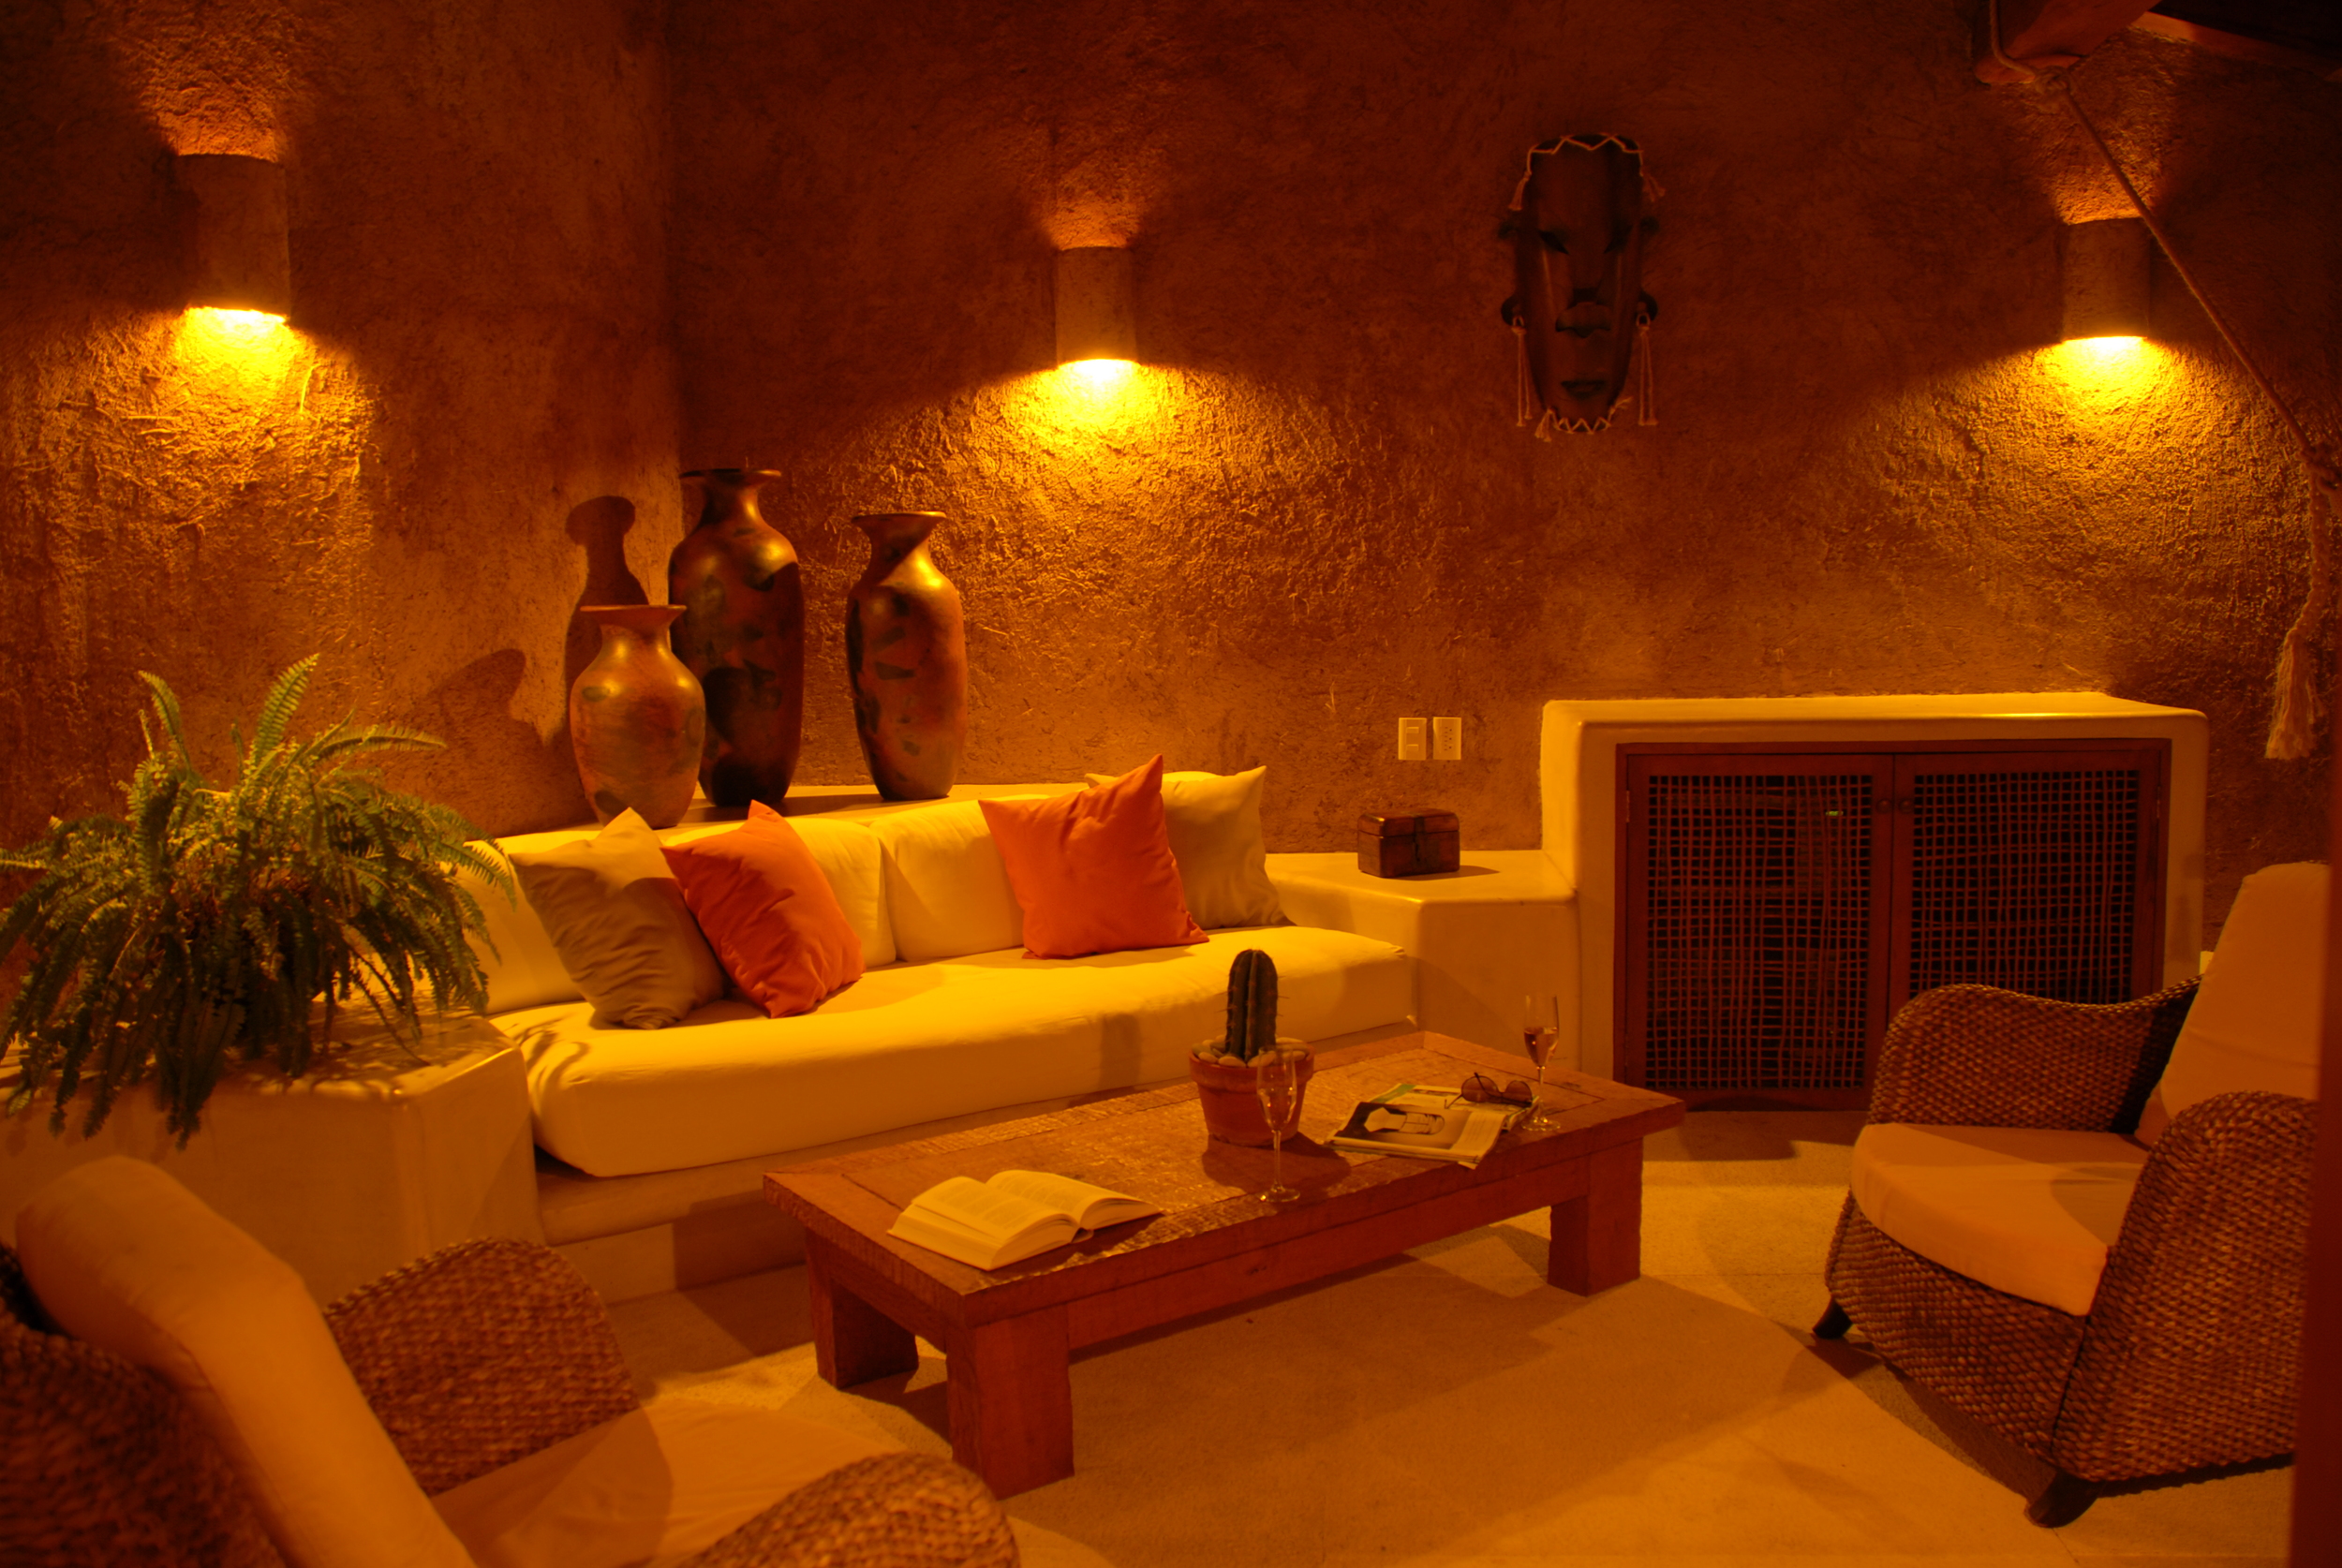 cinco-sentidos-hotel-zihuatanejo-mexico-properties-homes-for-sale.jpeg